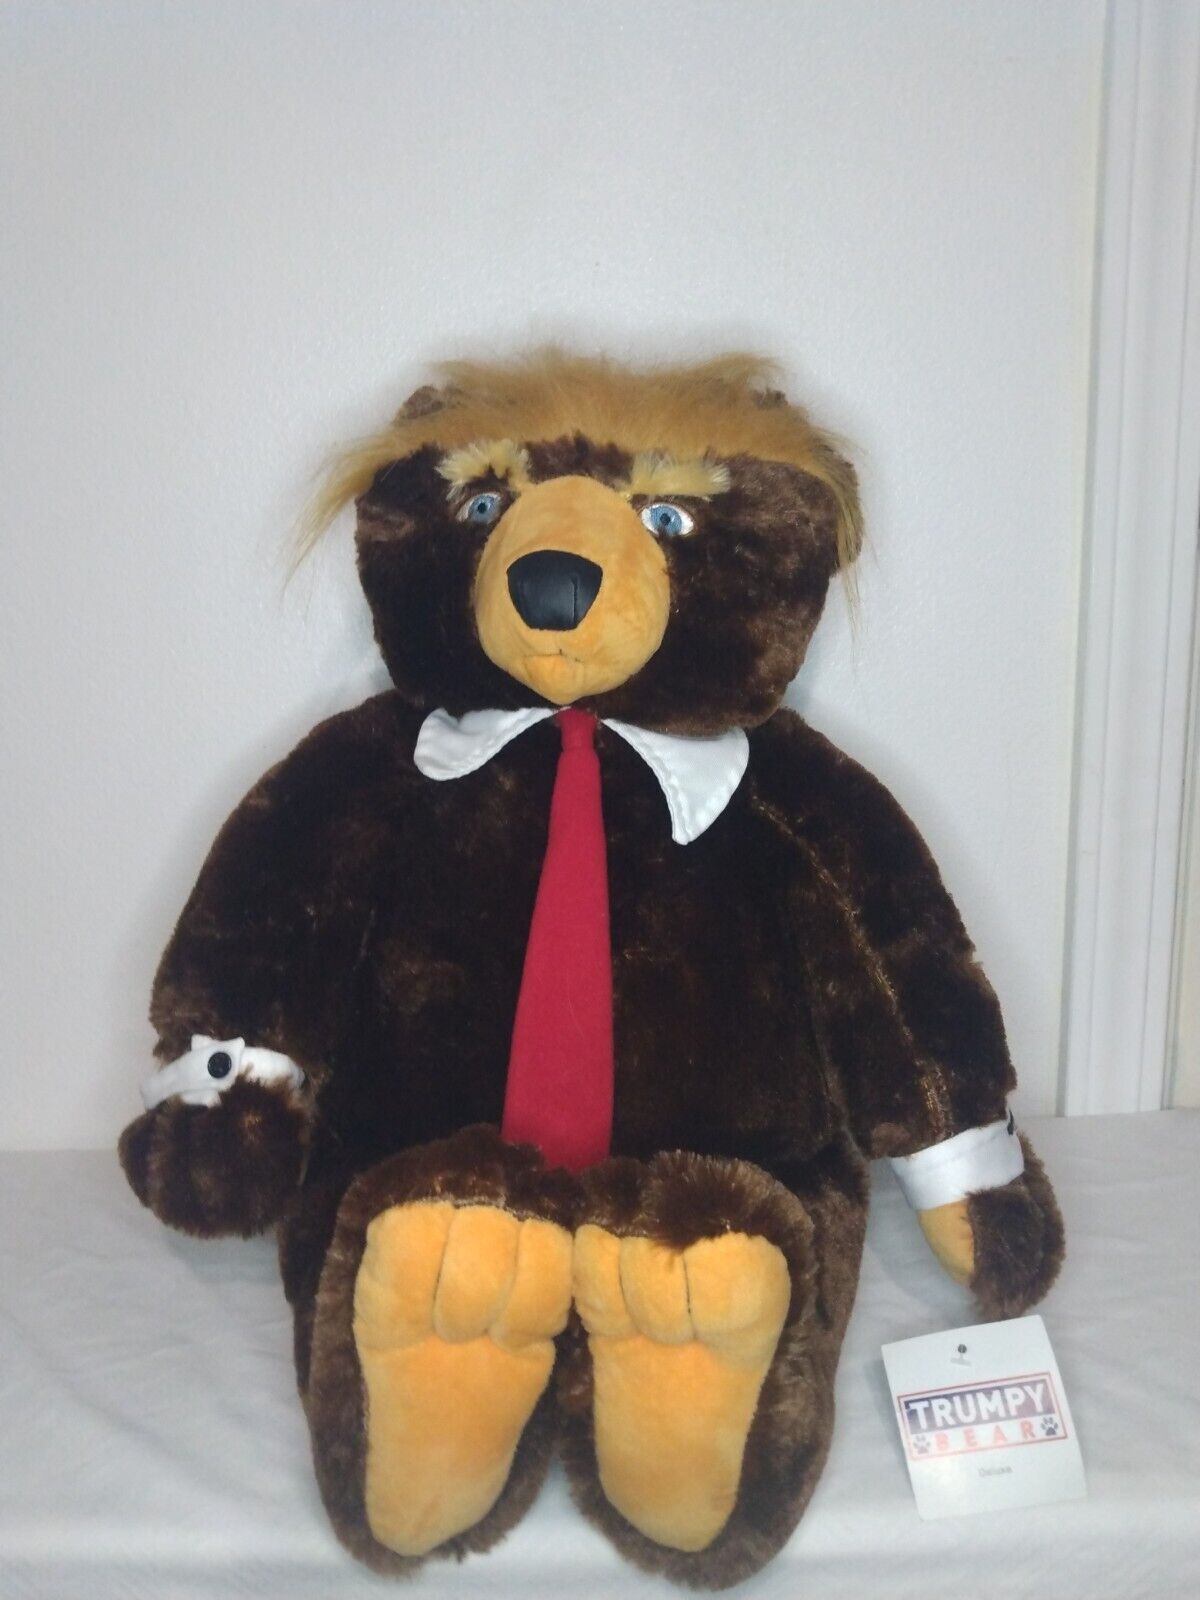 Donald Trump Teddy Bear Plush W/ American Flag 2017 Trumpy Bear Deluxe 22” New